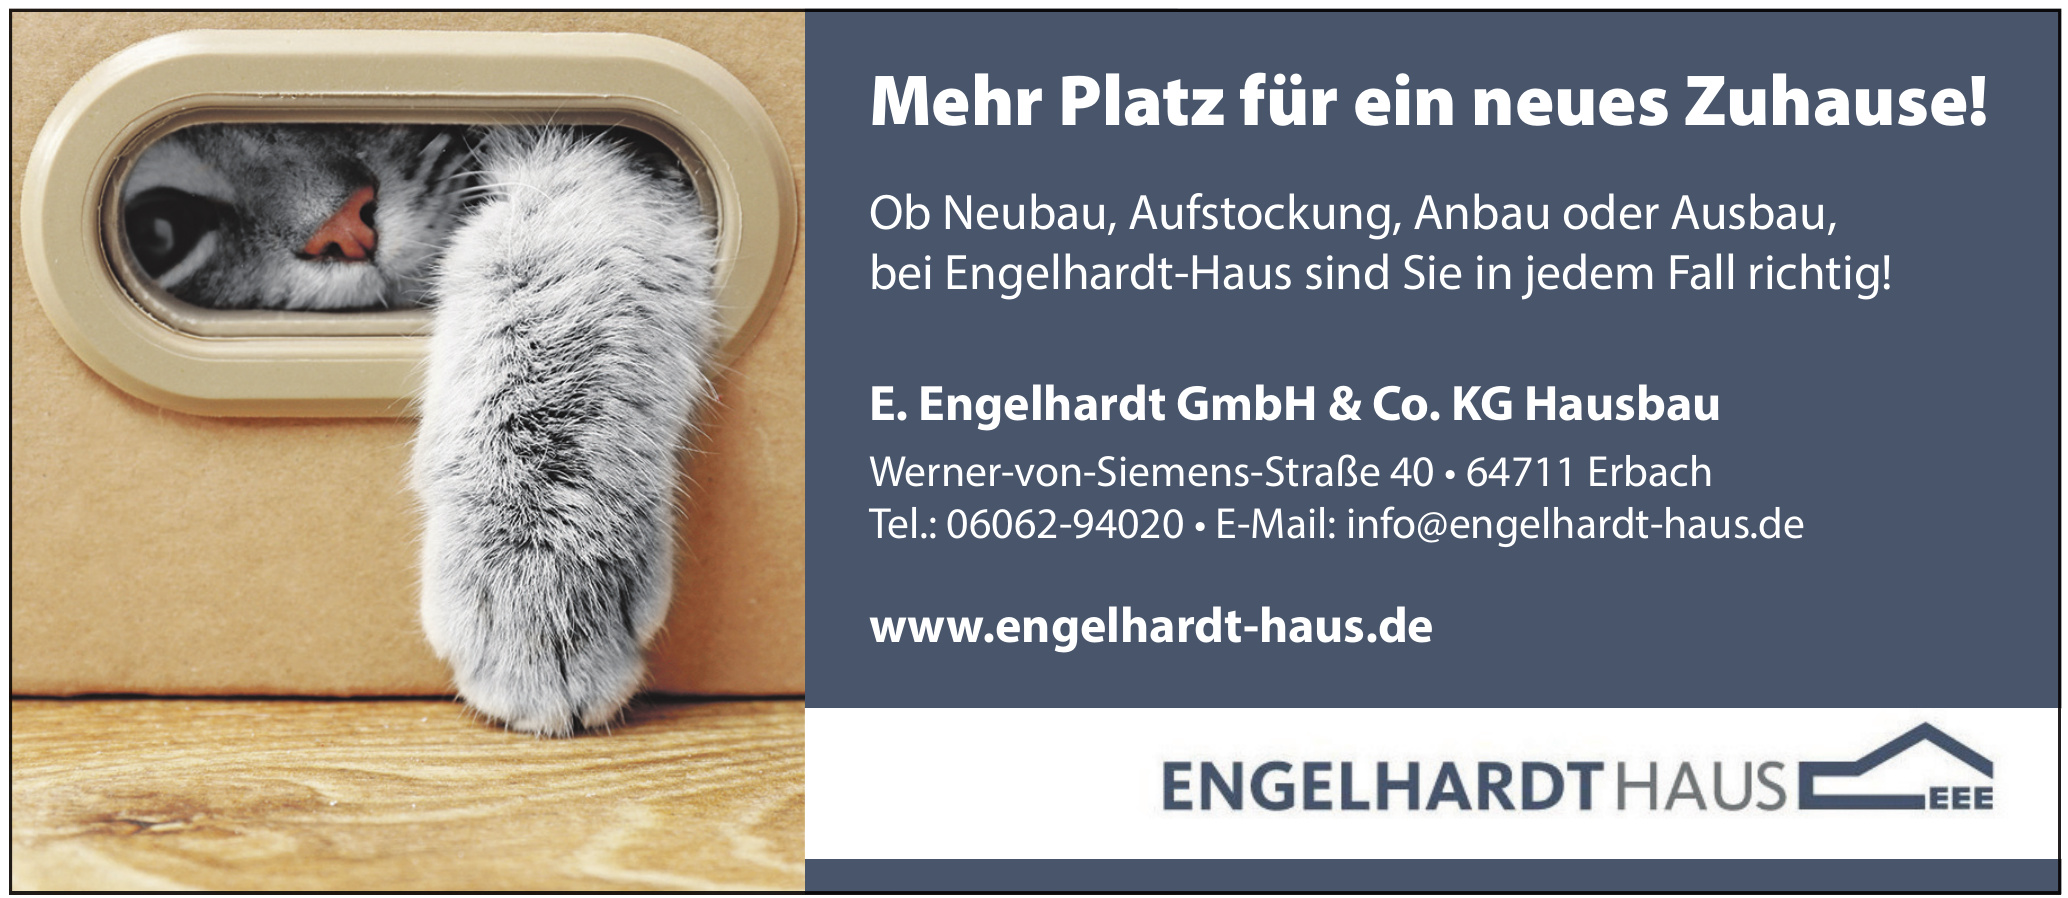 E. Engelhardt GmbH & Co. KG Hausbau